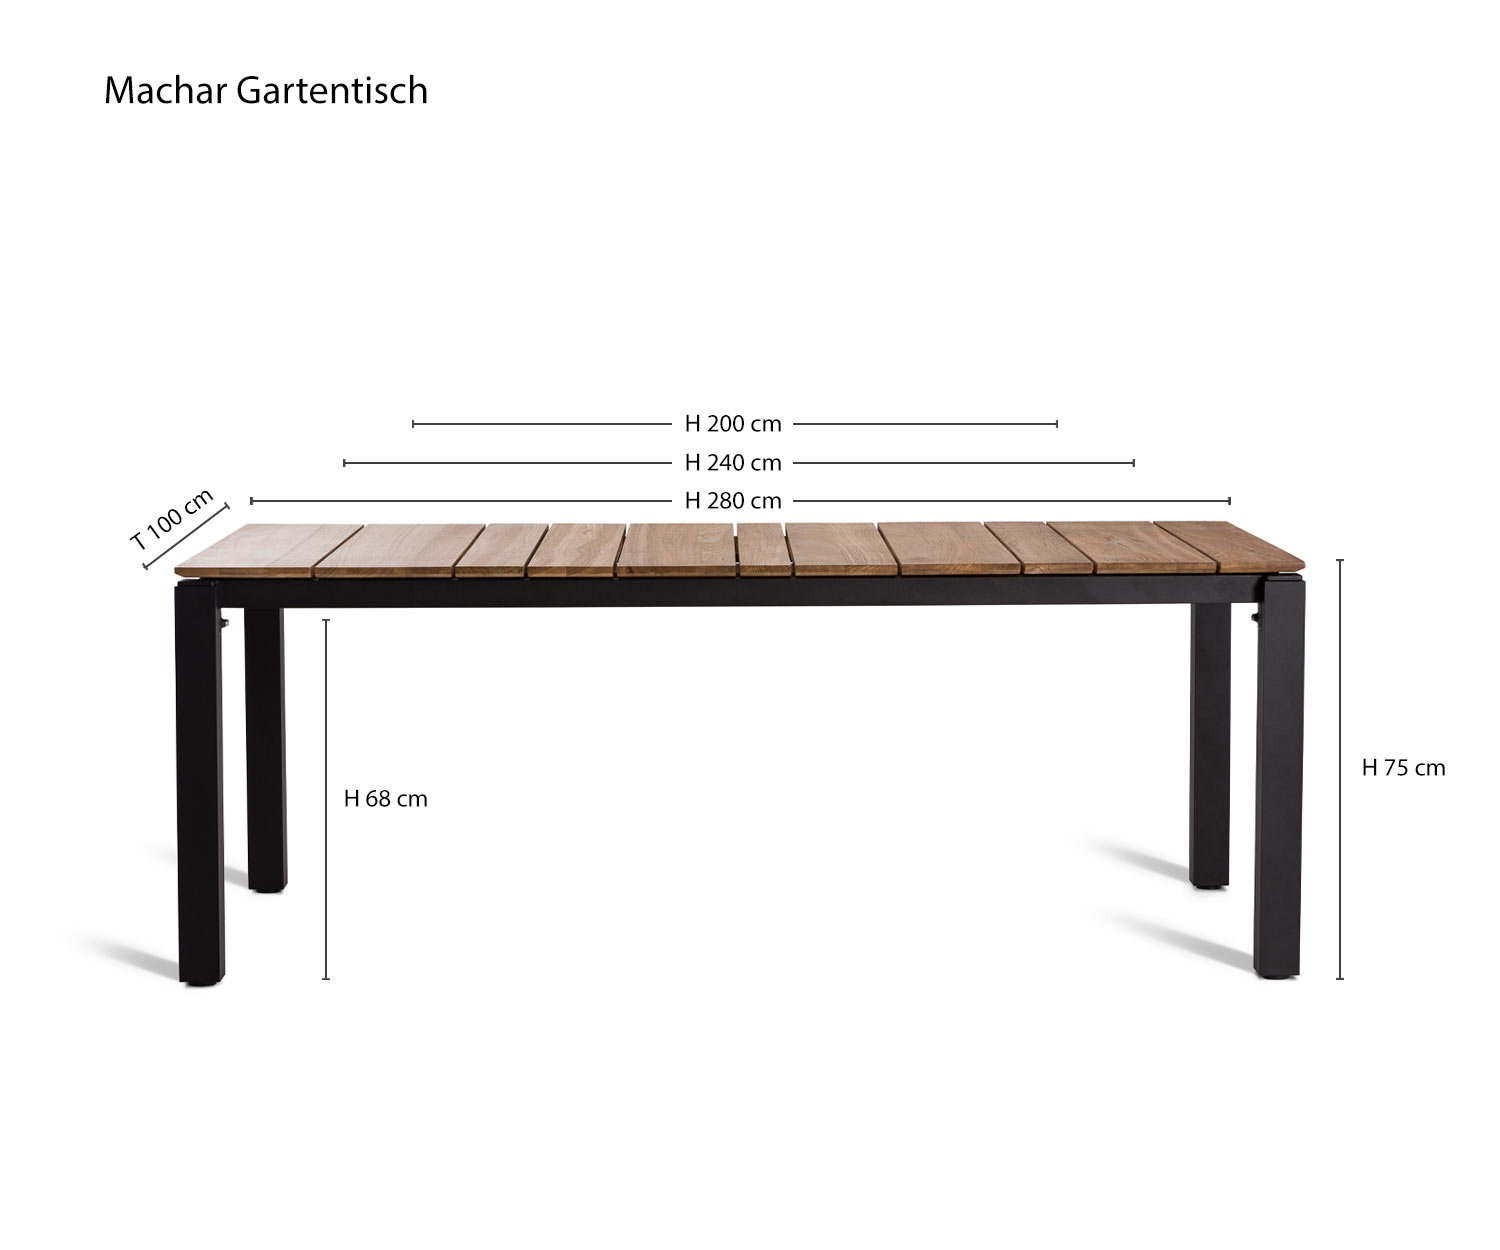 Robuste table de jardin design Machar de Oasiq Dimensions Croquis Dimensions